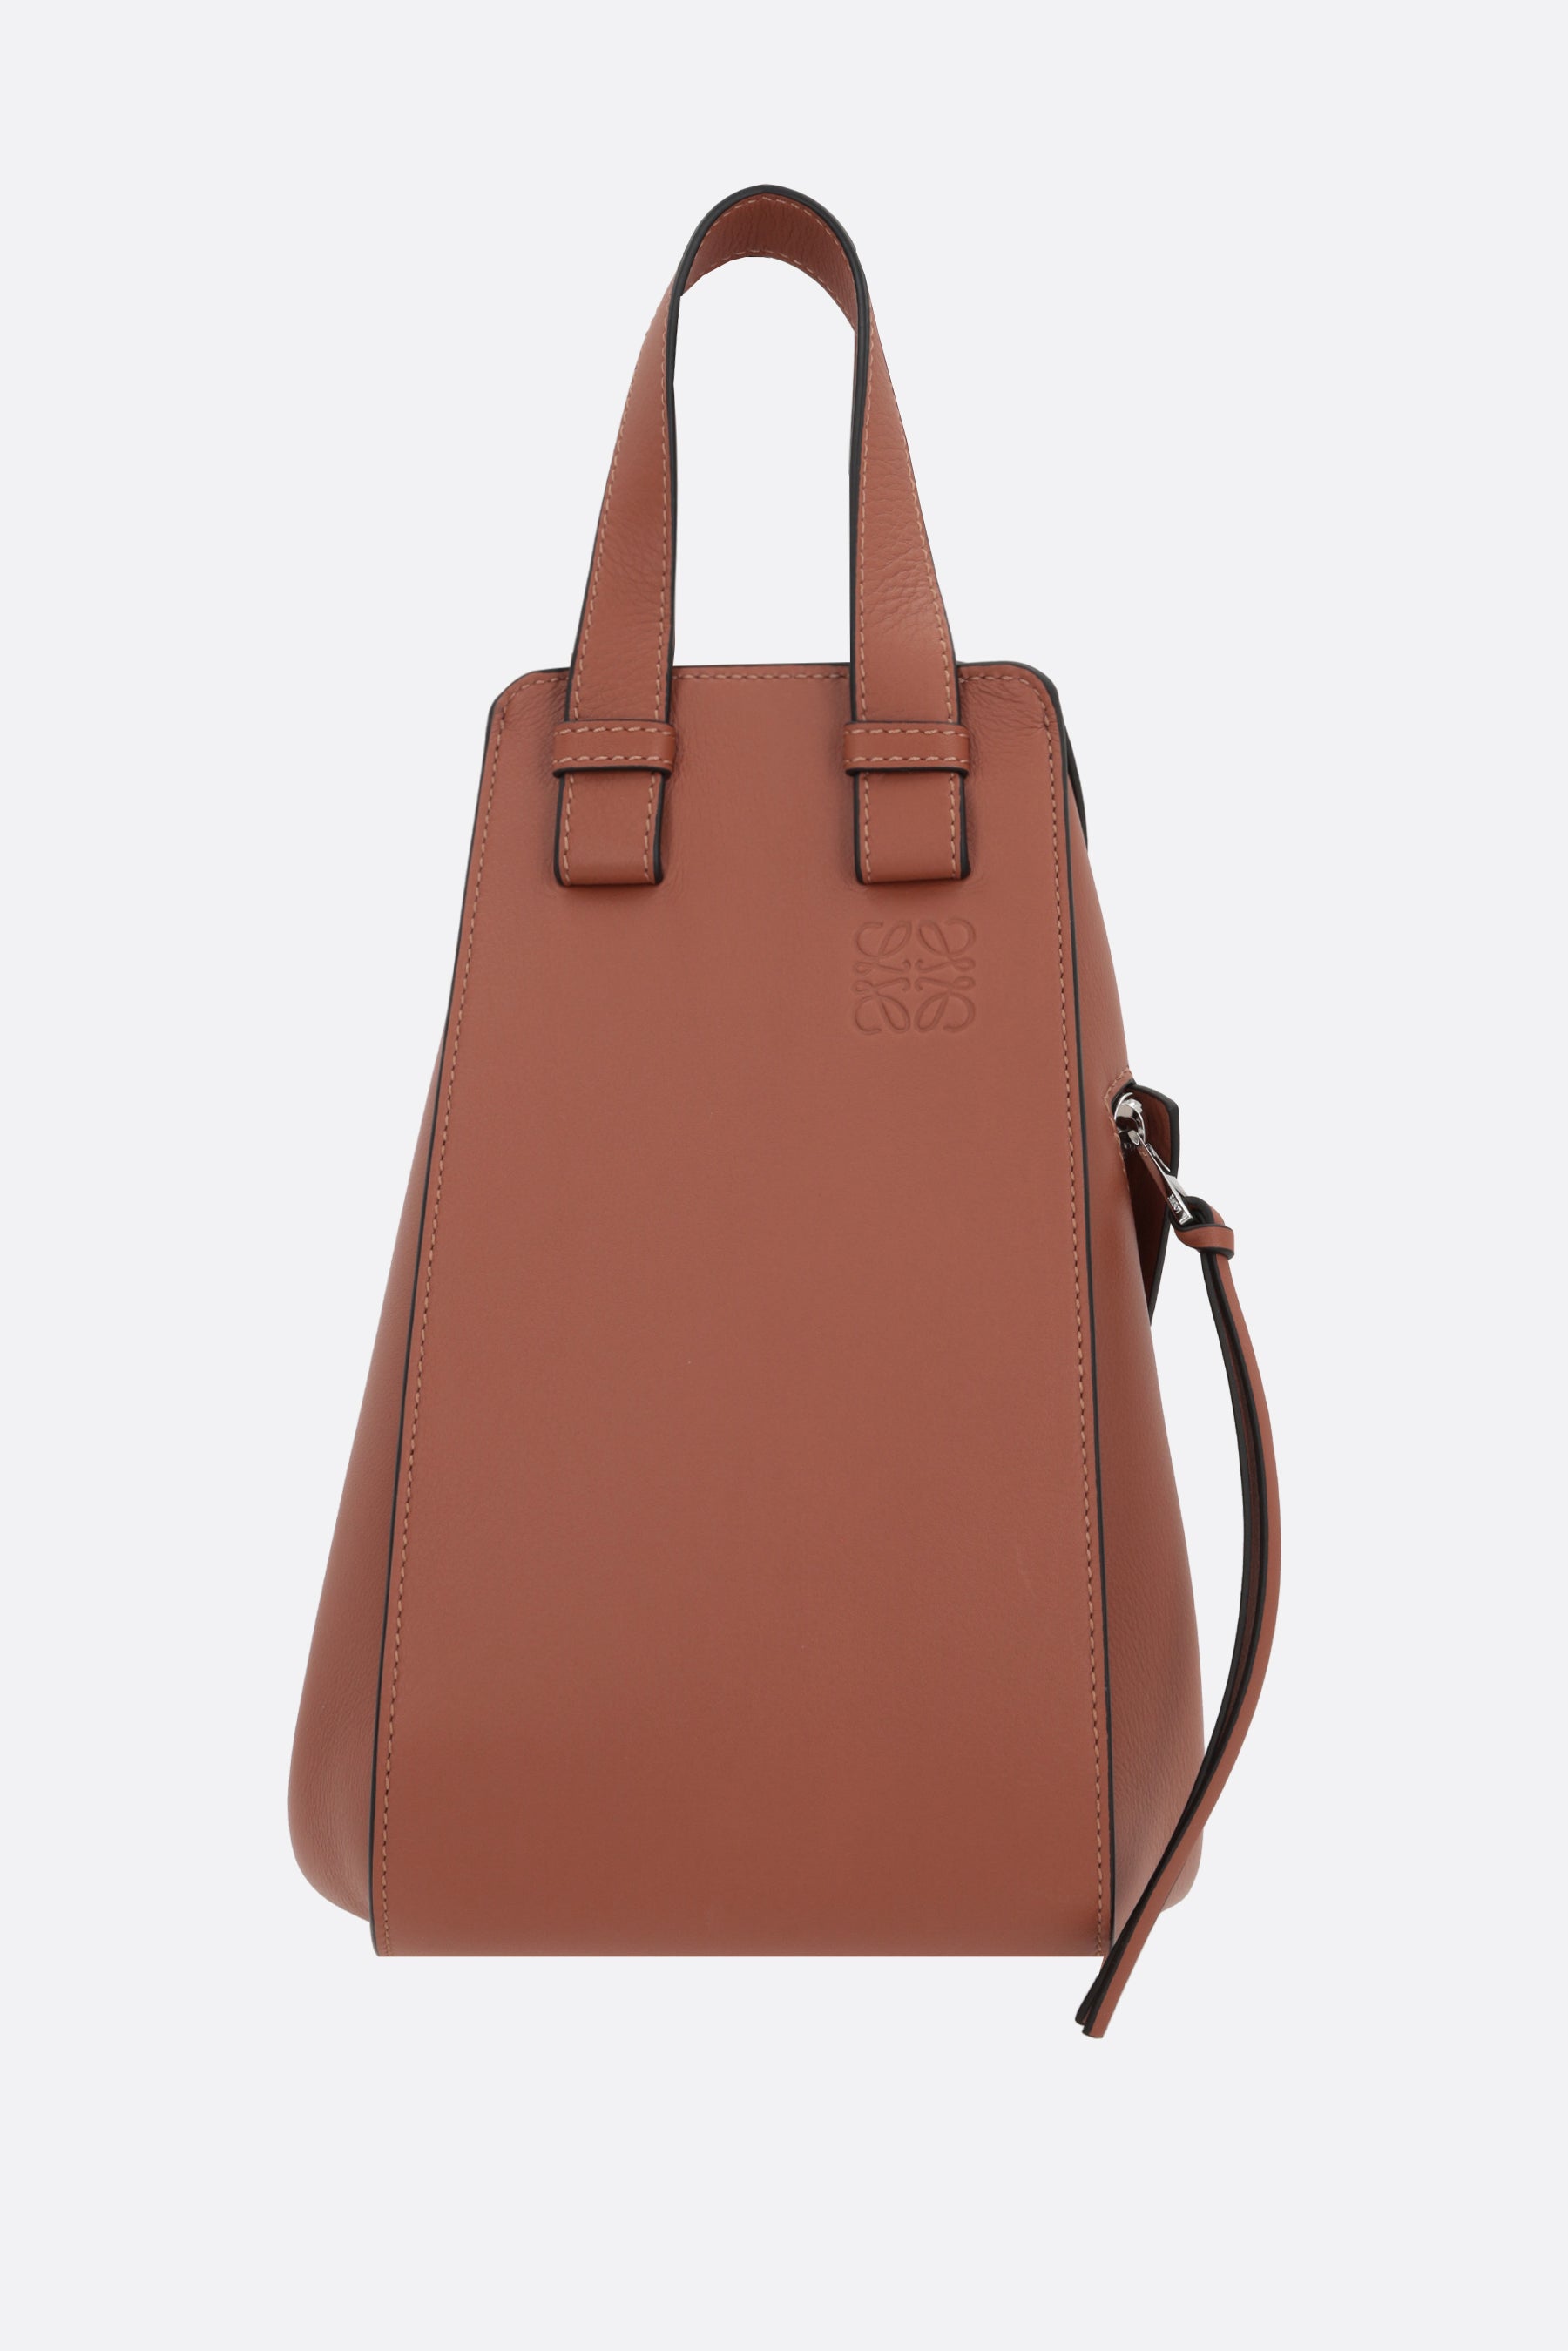 Hammock small handbag in Classic leather